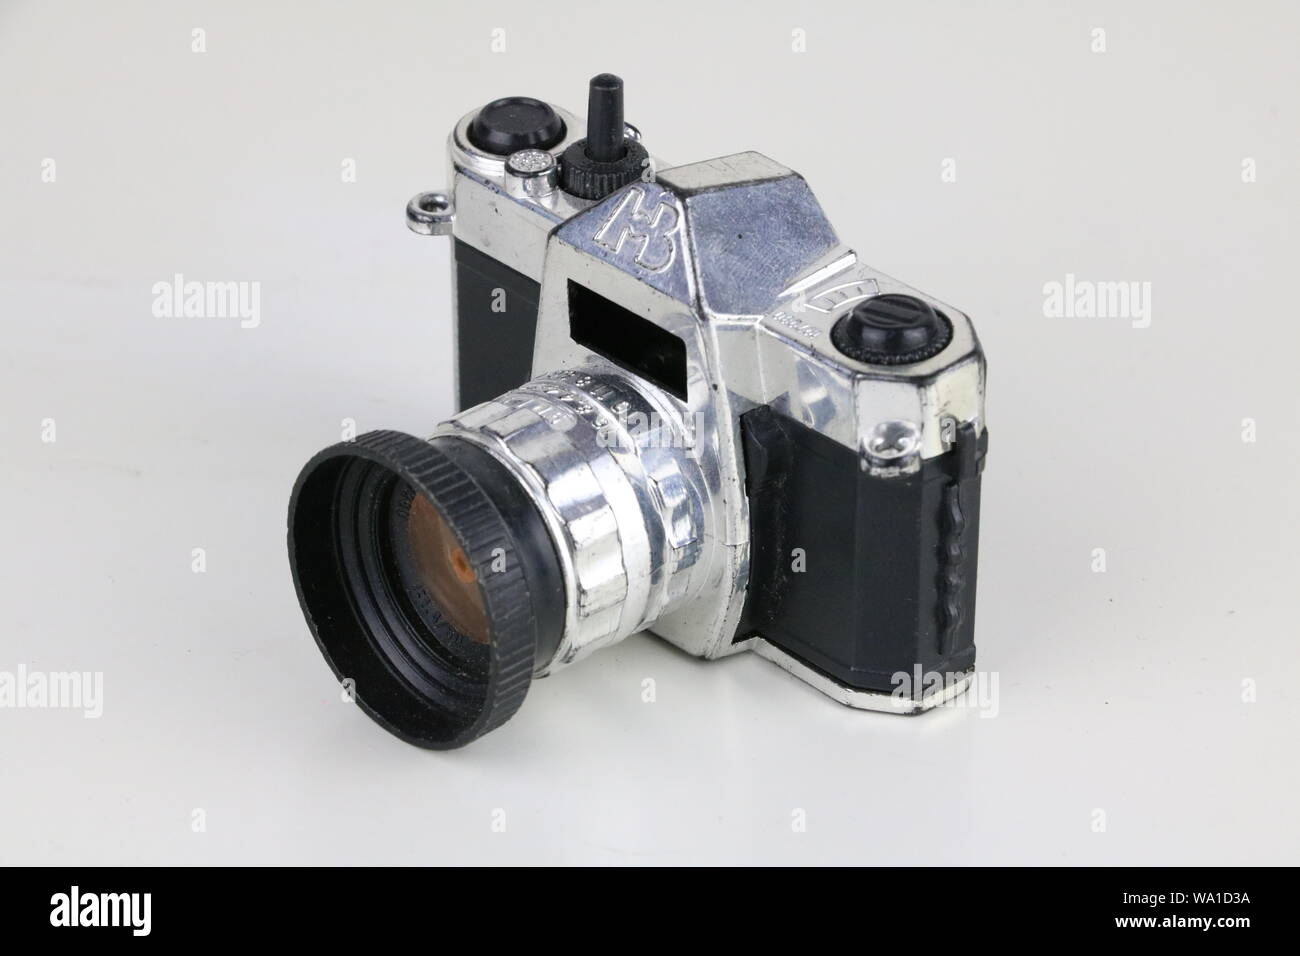 Vintage slideshow toy camera Stock Photo - Alamy